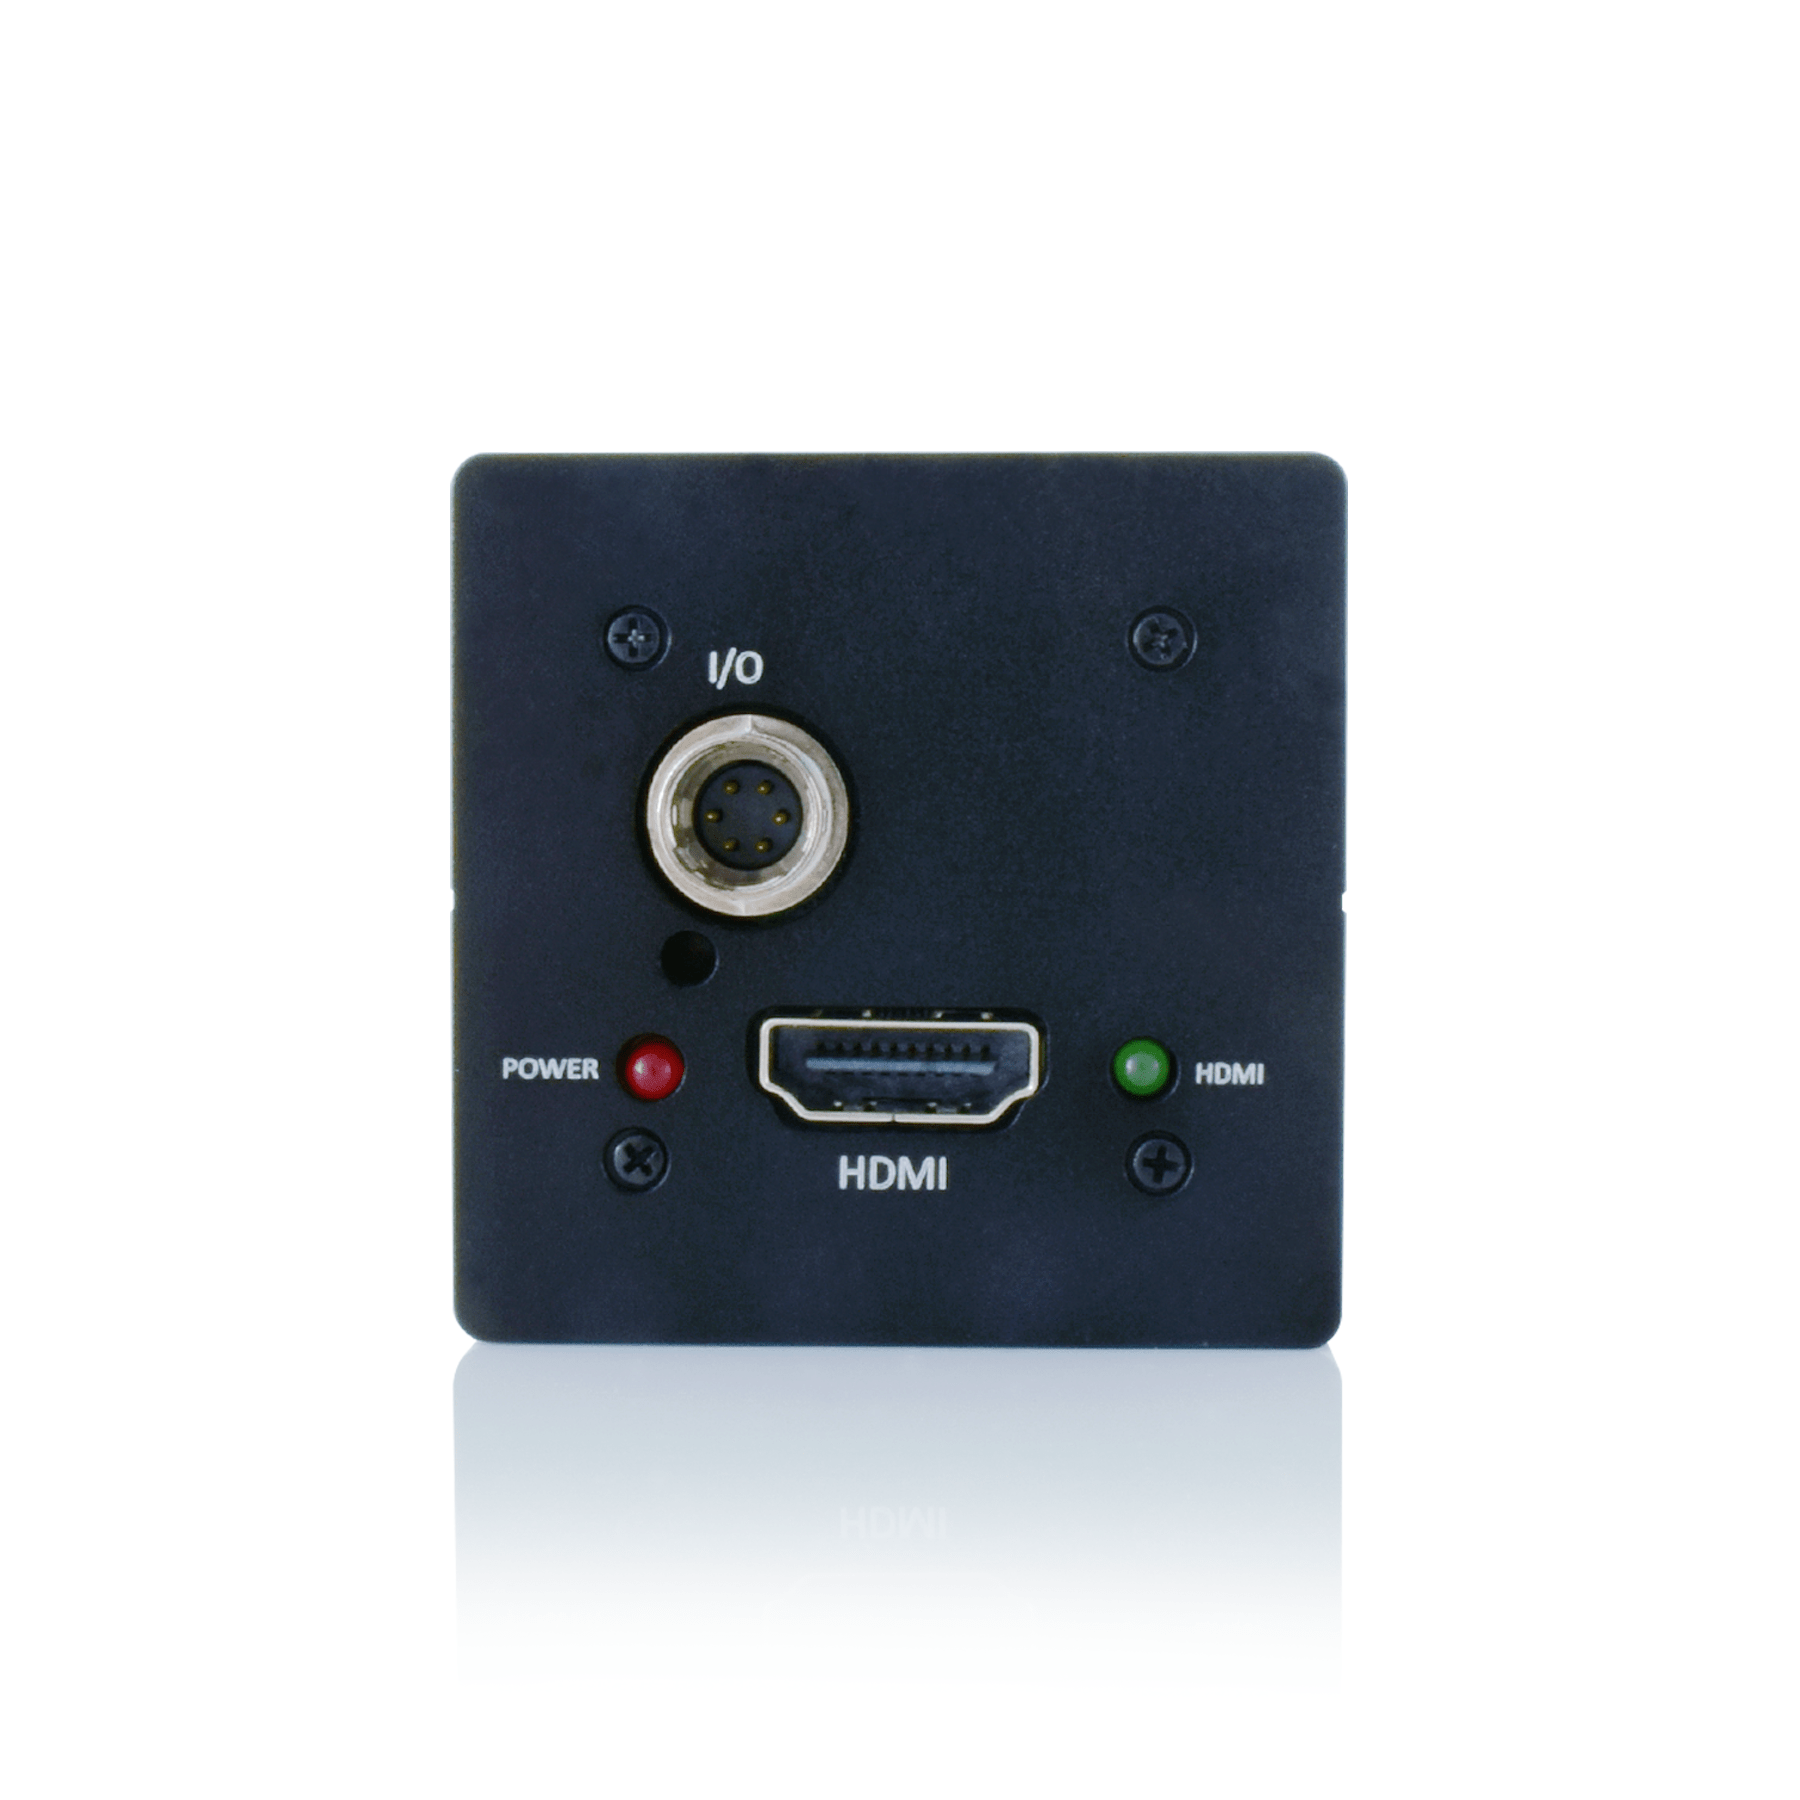 AIDA Imaging UHD-X3L 4K HDMI POV Camera